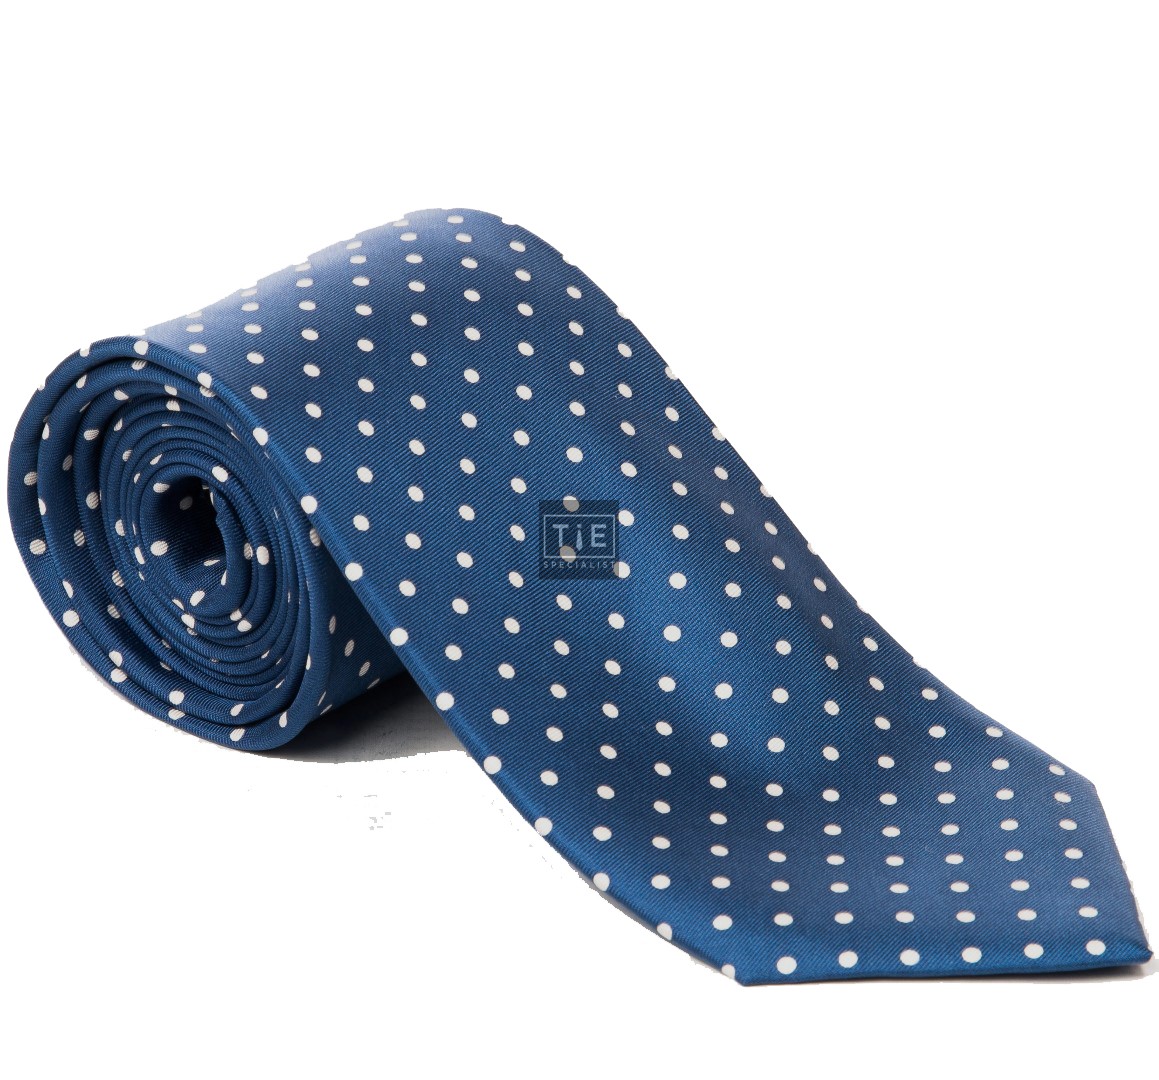 Navy Blue Woven Tie and Hankie Set - Polka Dot Blue Pocket Square & Tie